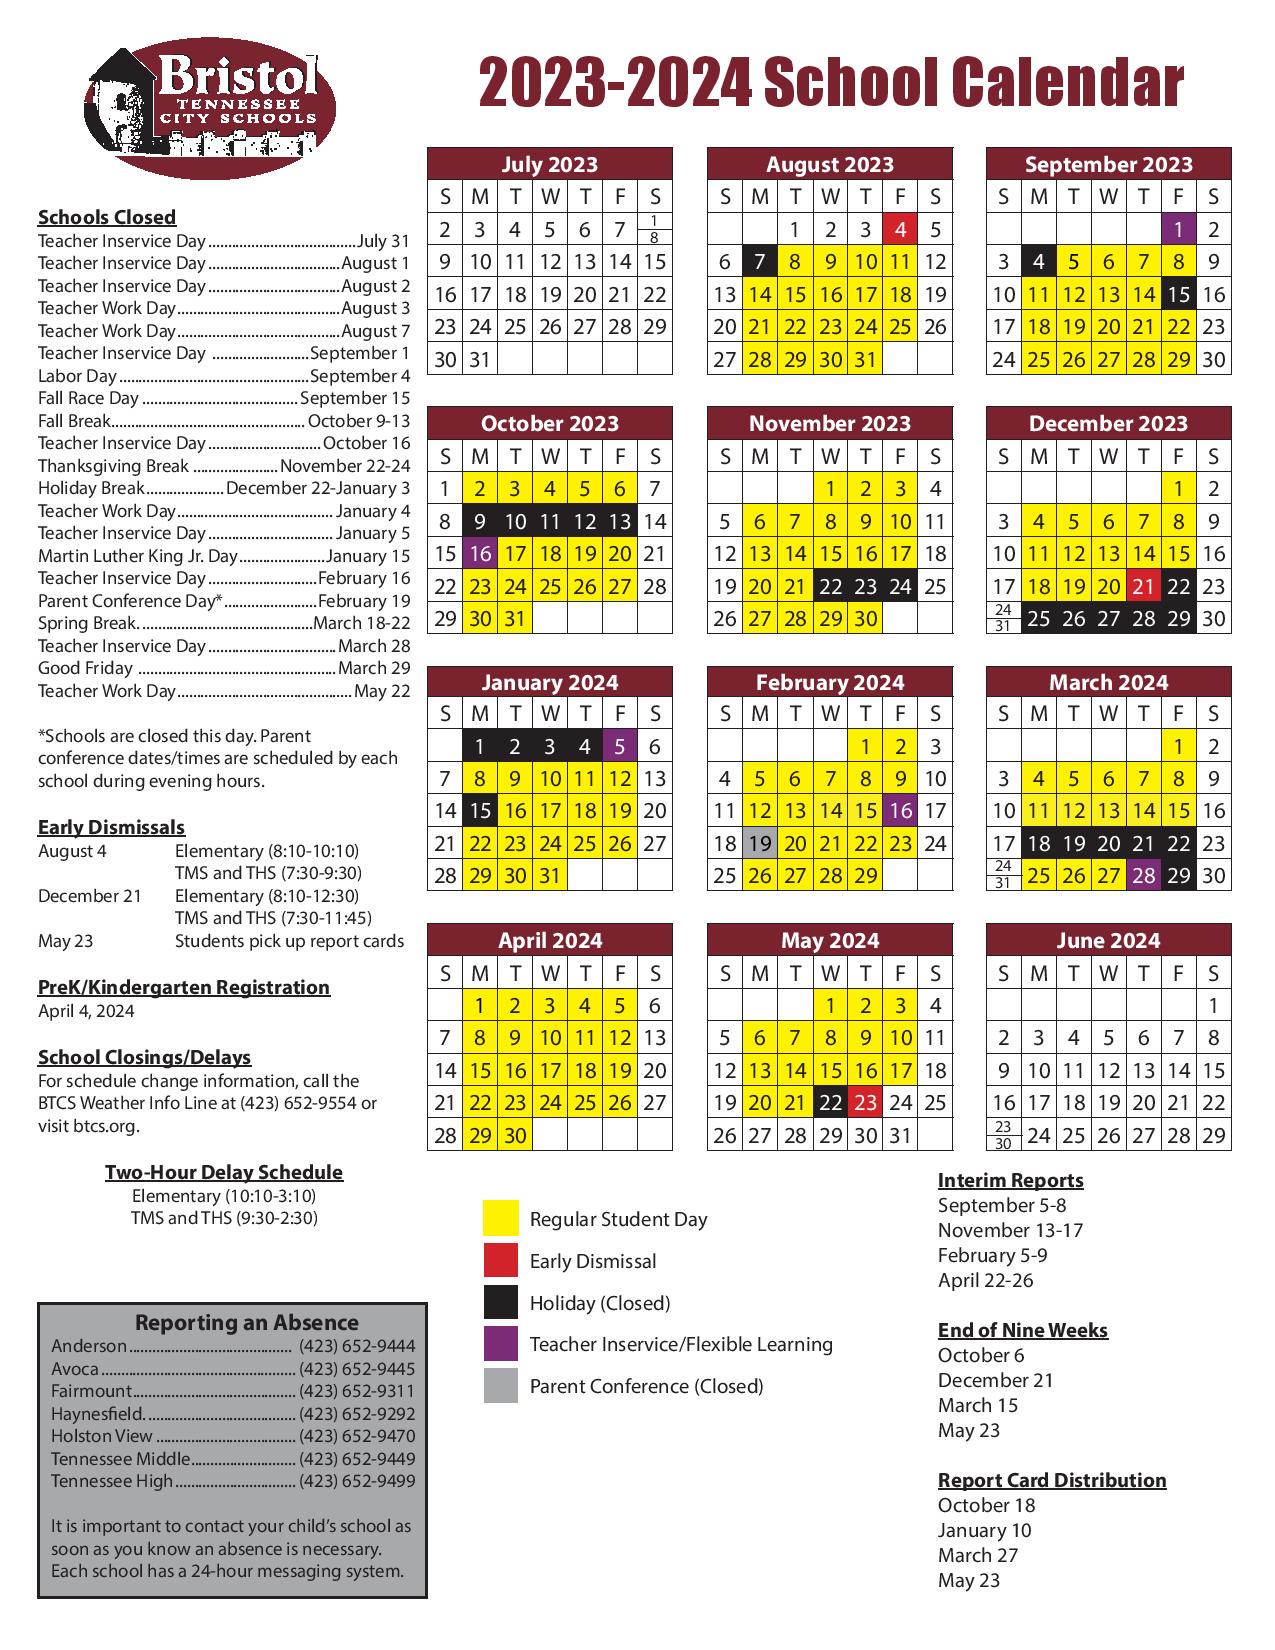 Bristol Tennessee City Schools Calendar 20232024 in PDF